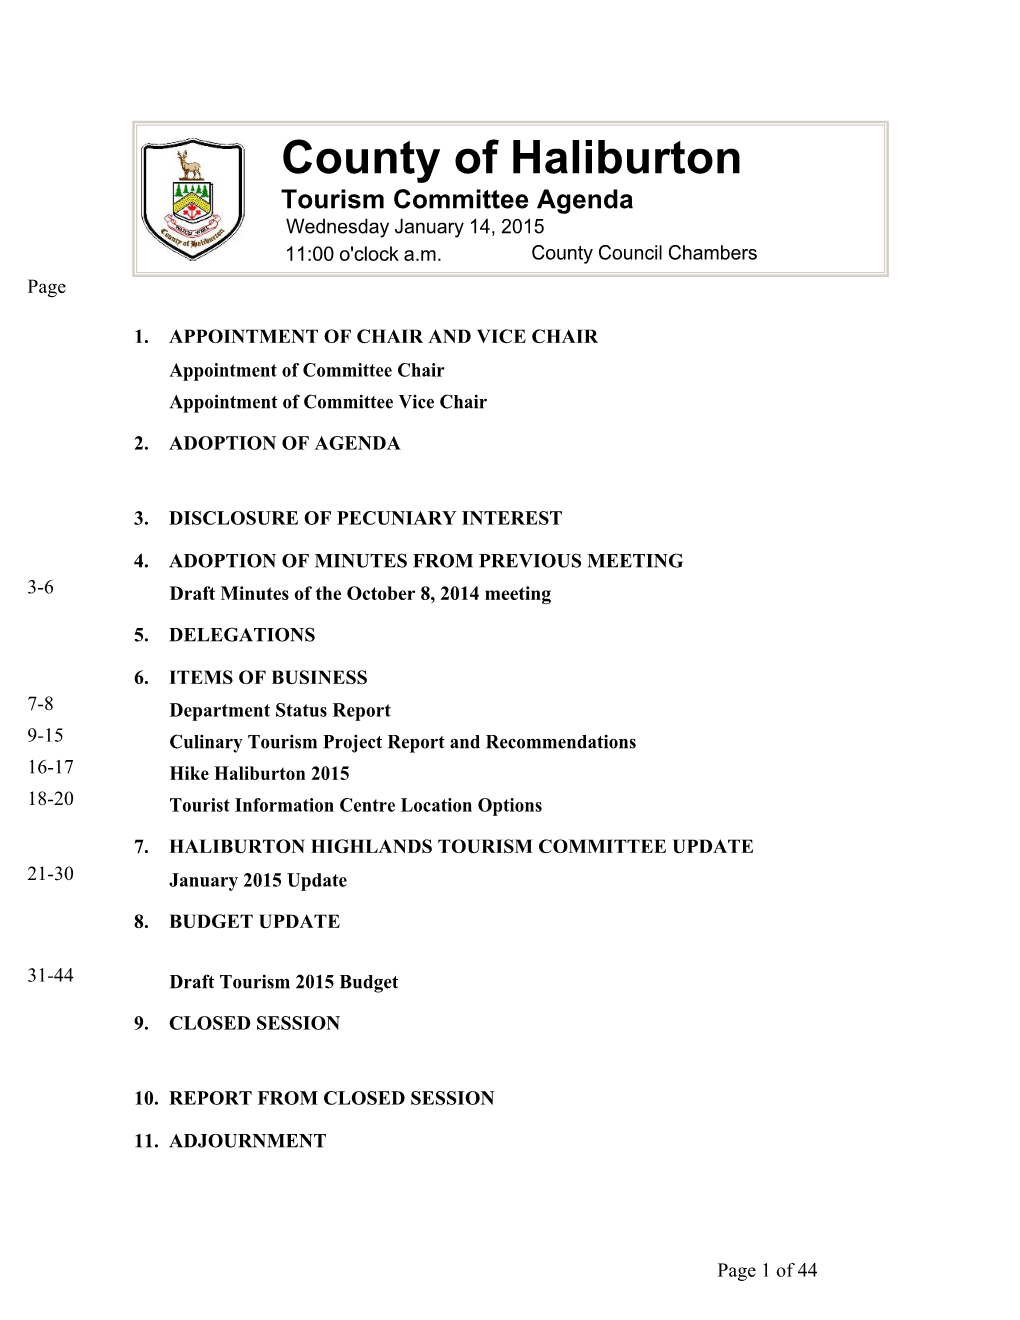 County of Haliburton Tourism Committee Agenda Wednesday January 14, 2015 11:00 O'clock A.M